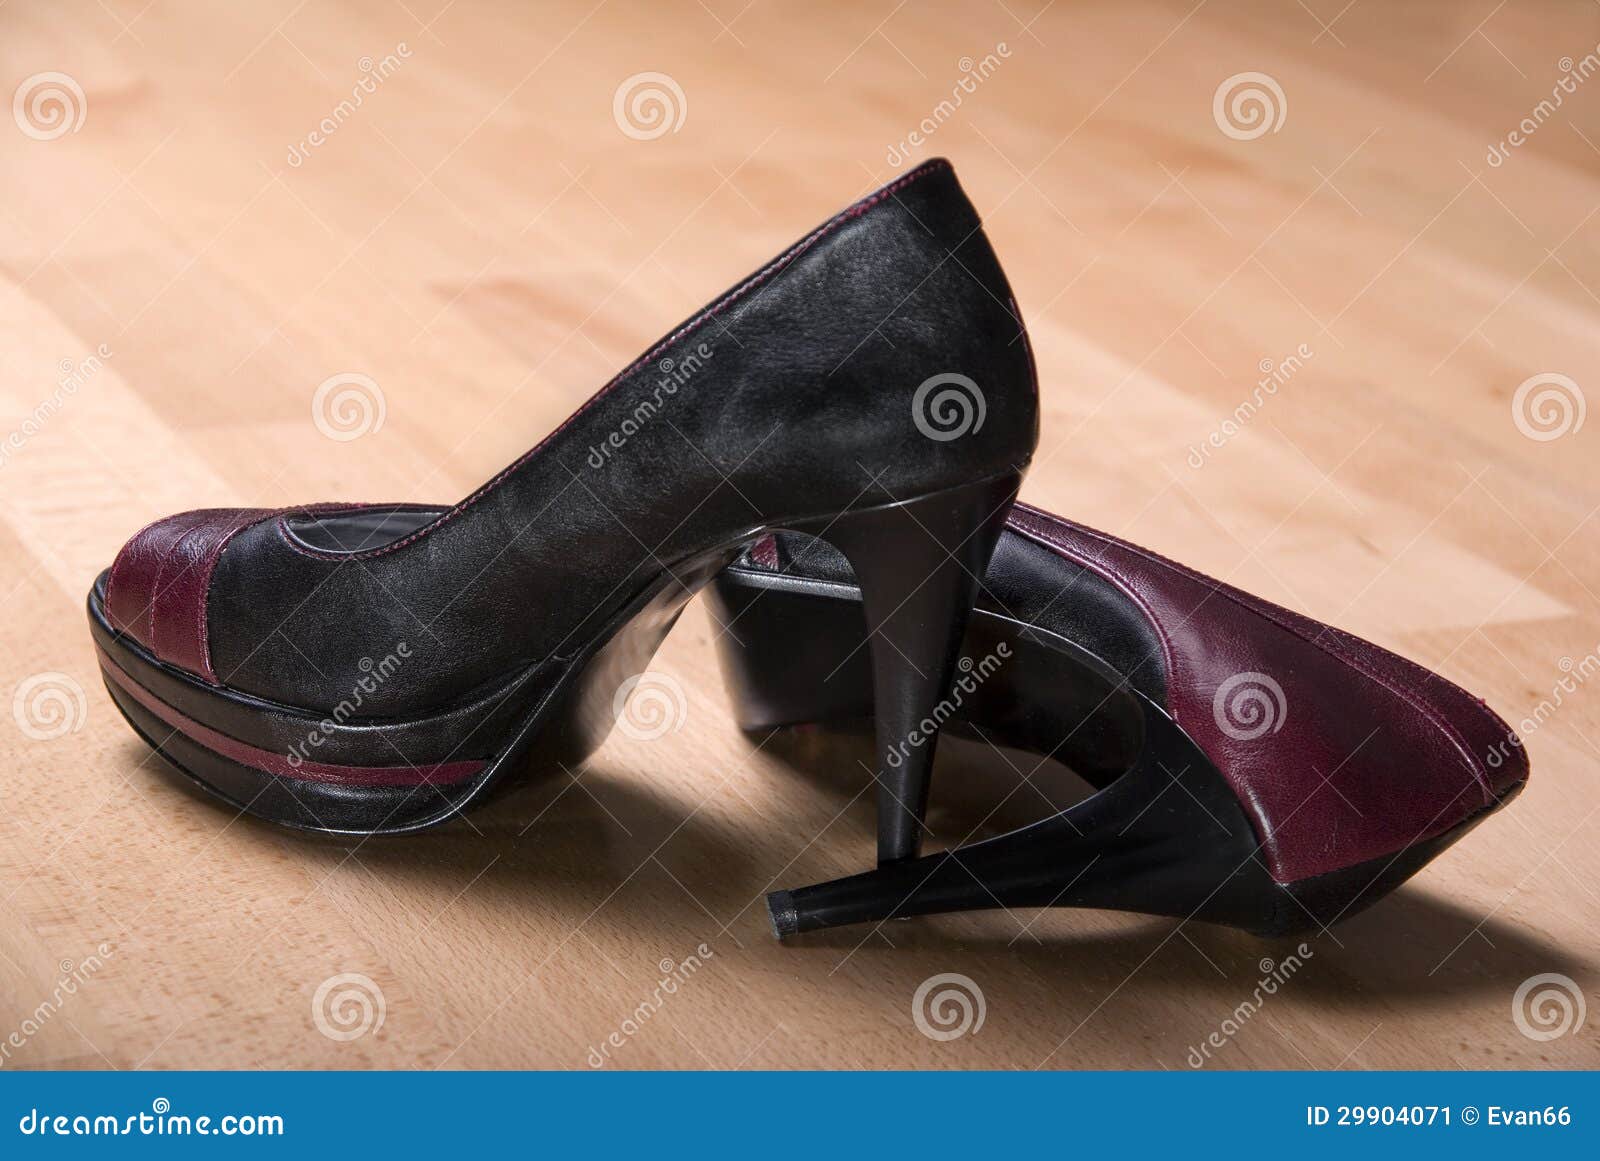 eformoda by emre yılmaz High Heels - Black - Stiletto Heels - Trendyol